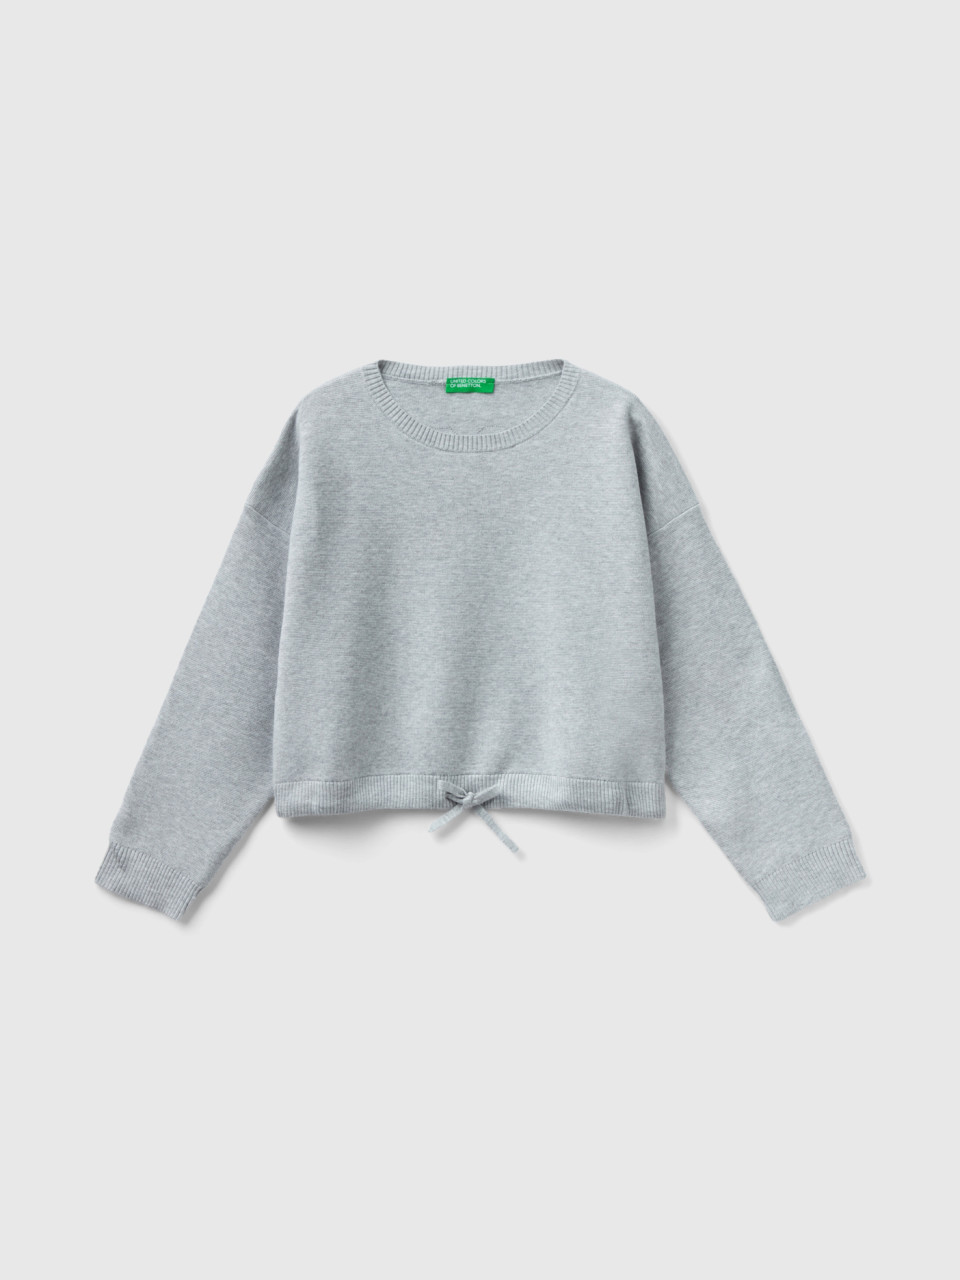 Benetton, Sweater With Drawstring, Gray, Kids